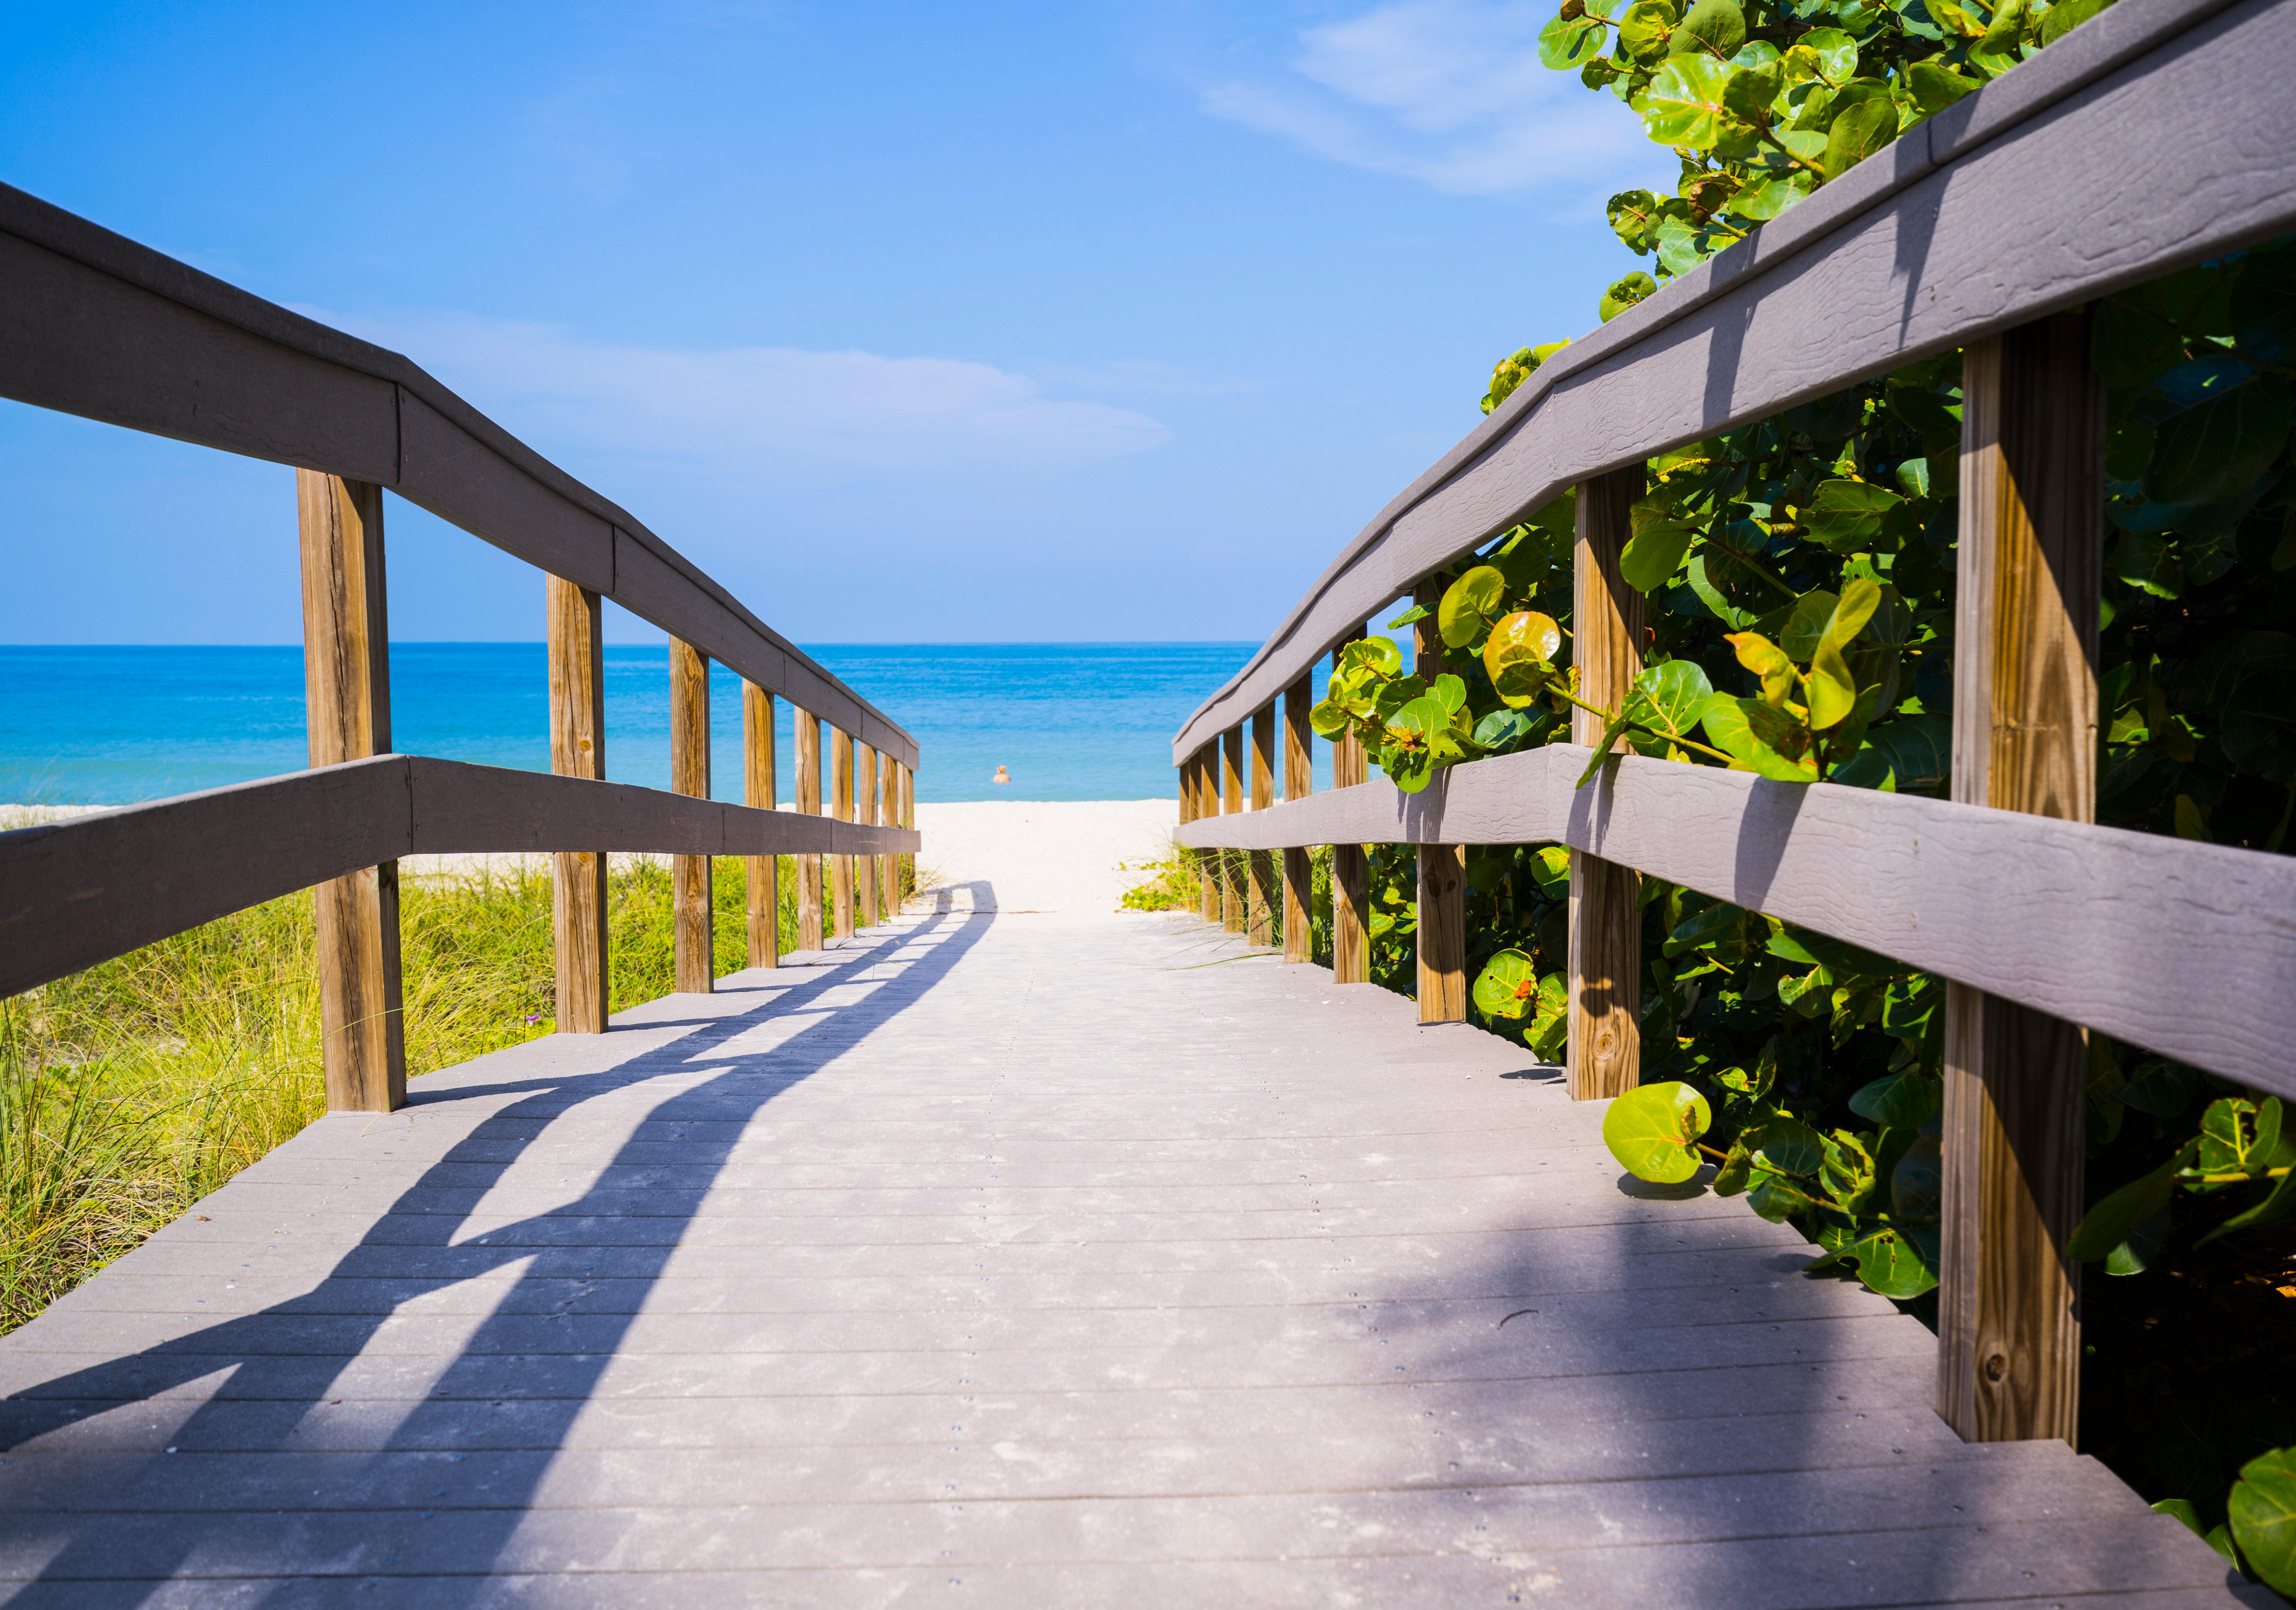 Florida, USA - Wooden boardwalk to ocean on Sunset Beach, Treasure Island, Florida on Gulf of Mexico in summer